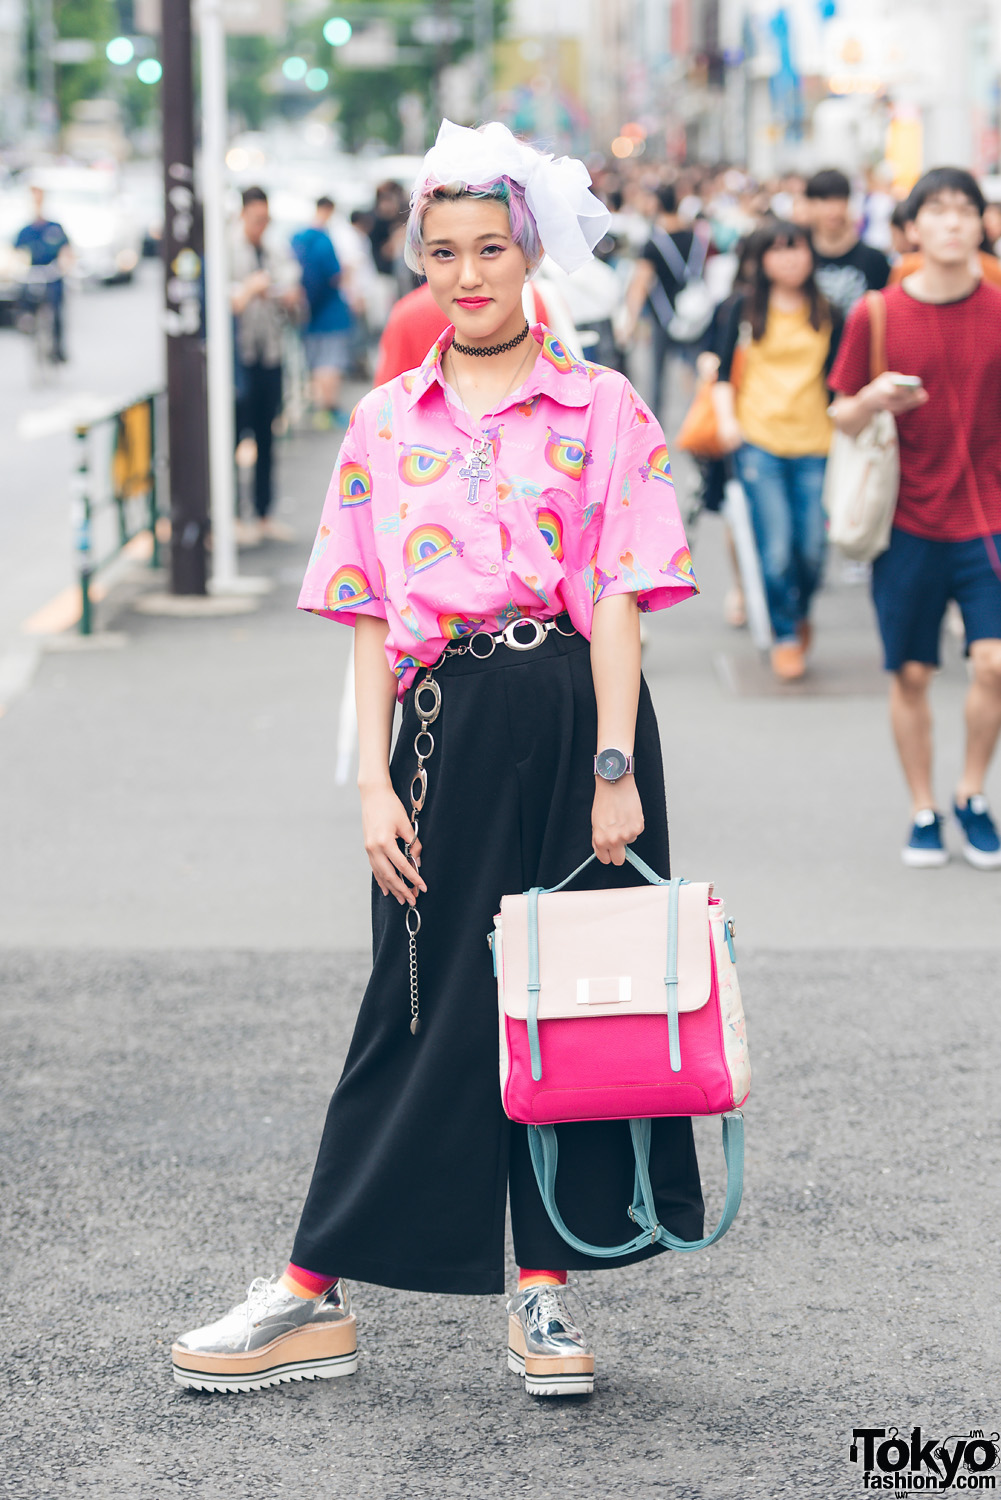 Harajuku Girl in Colorful Fashion w/ CawaiiTillIDie, Kinji, Happy Socks, Jeffrey Campbell & Amijed